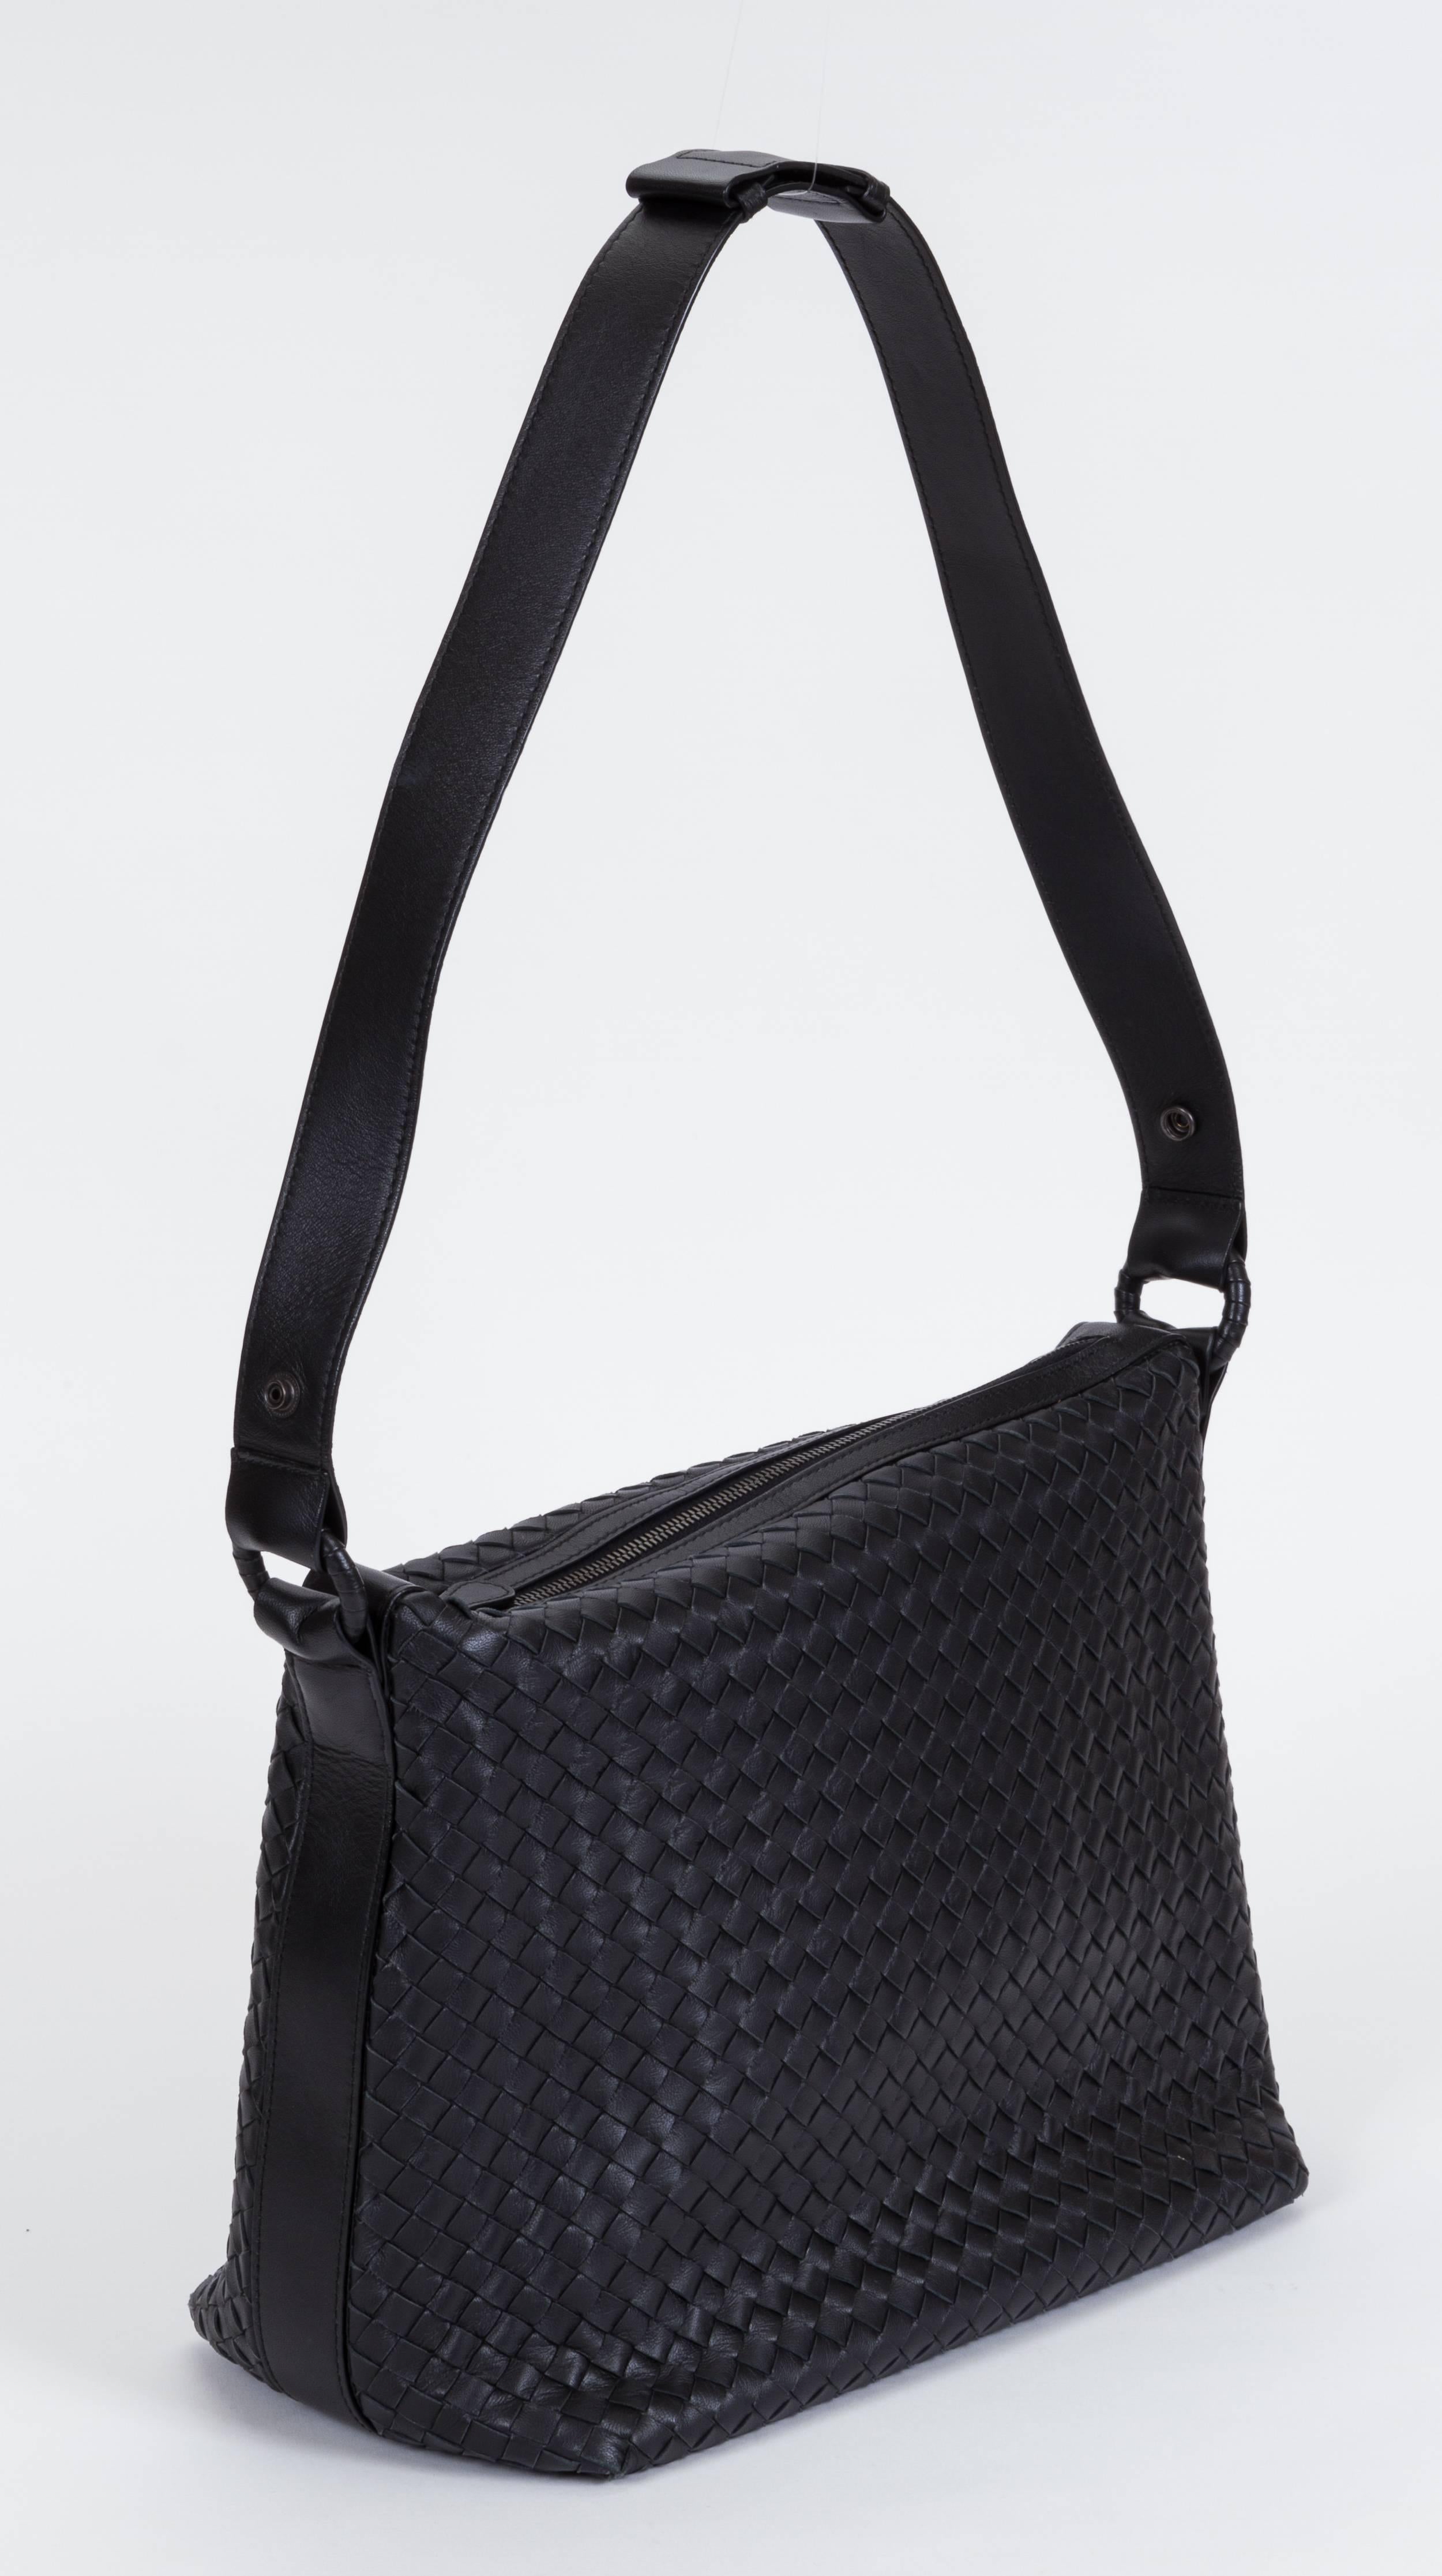 Bottega Veneta new condition black leather intricate bag with top zipper. 15